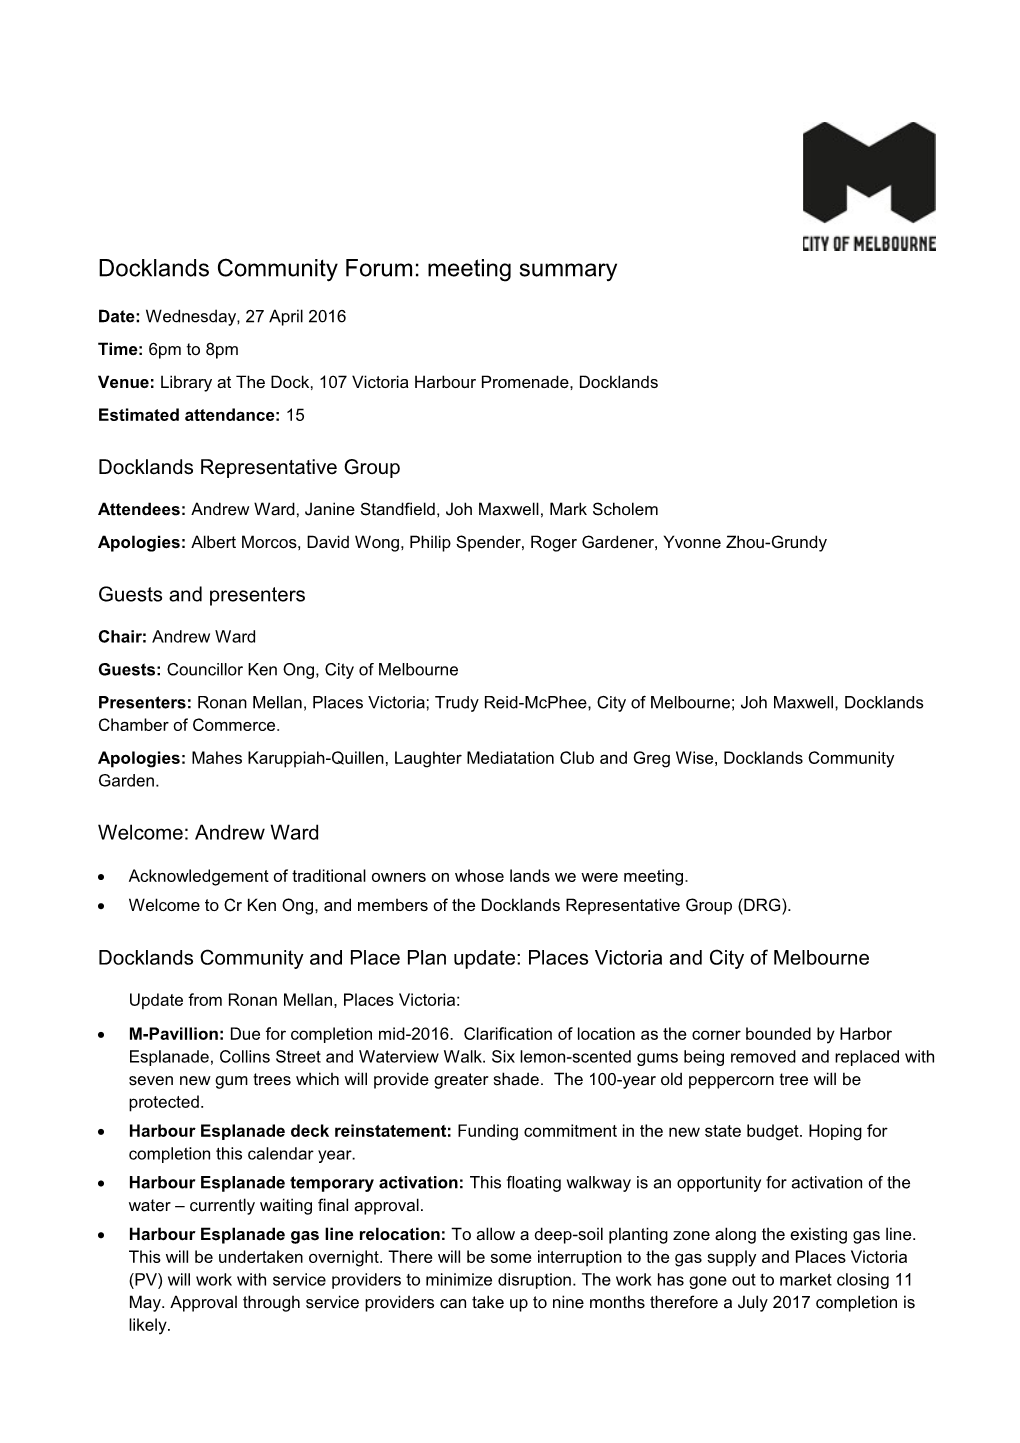 Docklands Community Forum: Meeting Summary, 27 April 2016